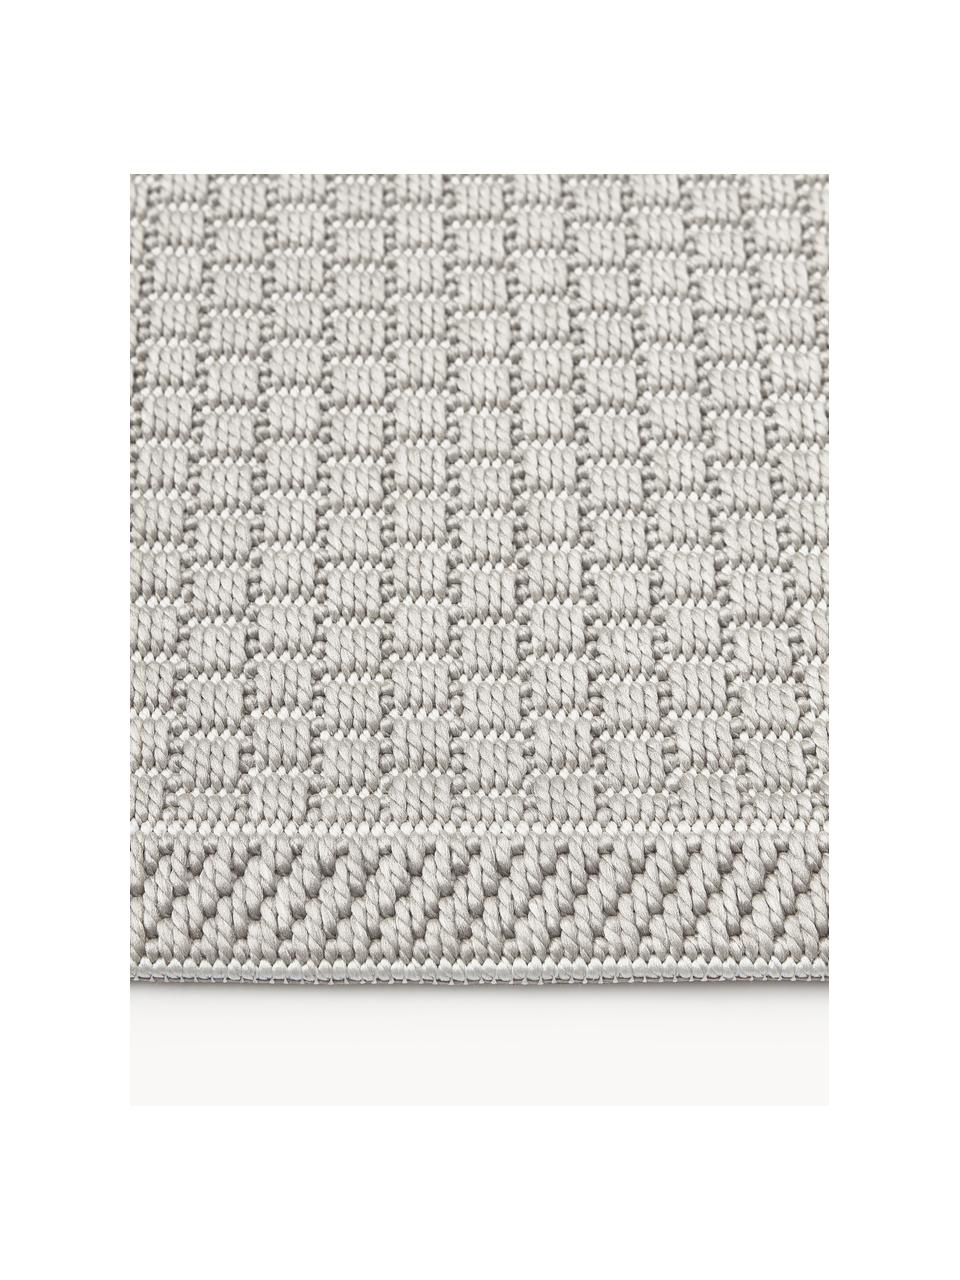 Kulatý interiérový a exteriérový koberec Toronto, 100 % polypropylen, Šedá, Ø 120 cm (velikost S)